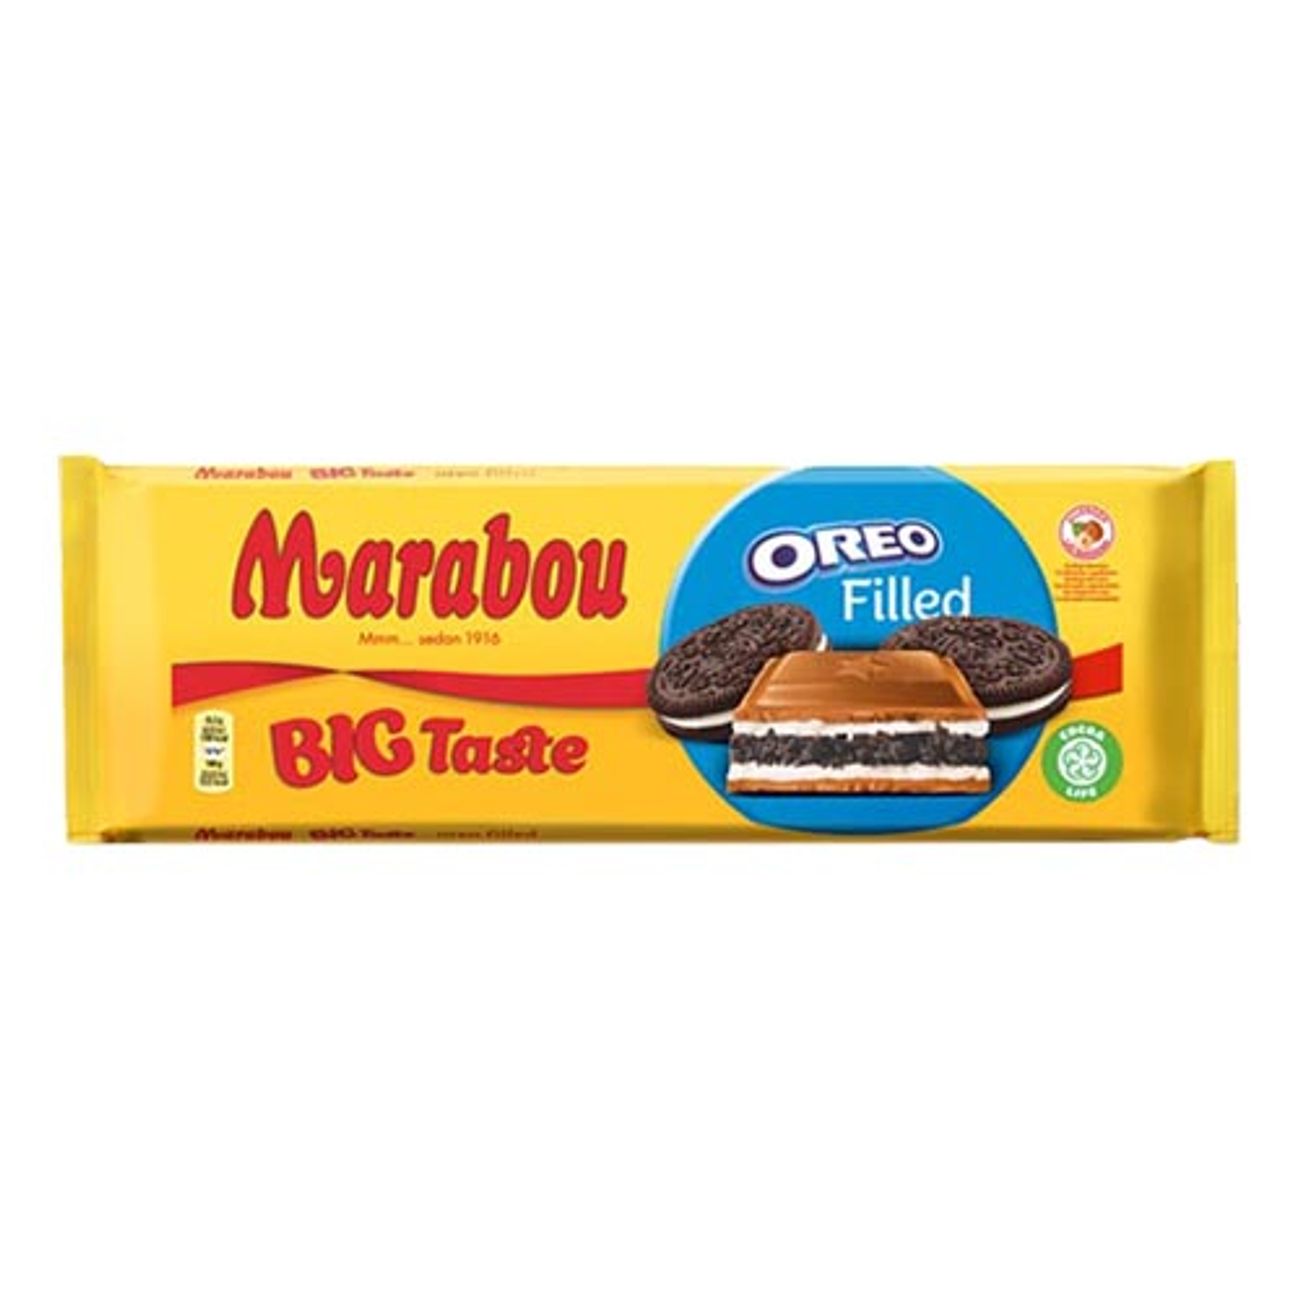 marabou-big-taste-oreo-chokladkaka-1